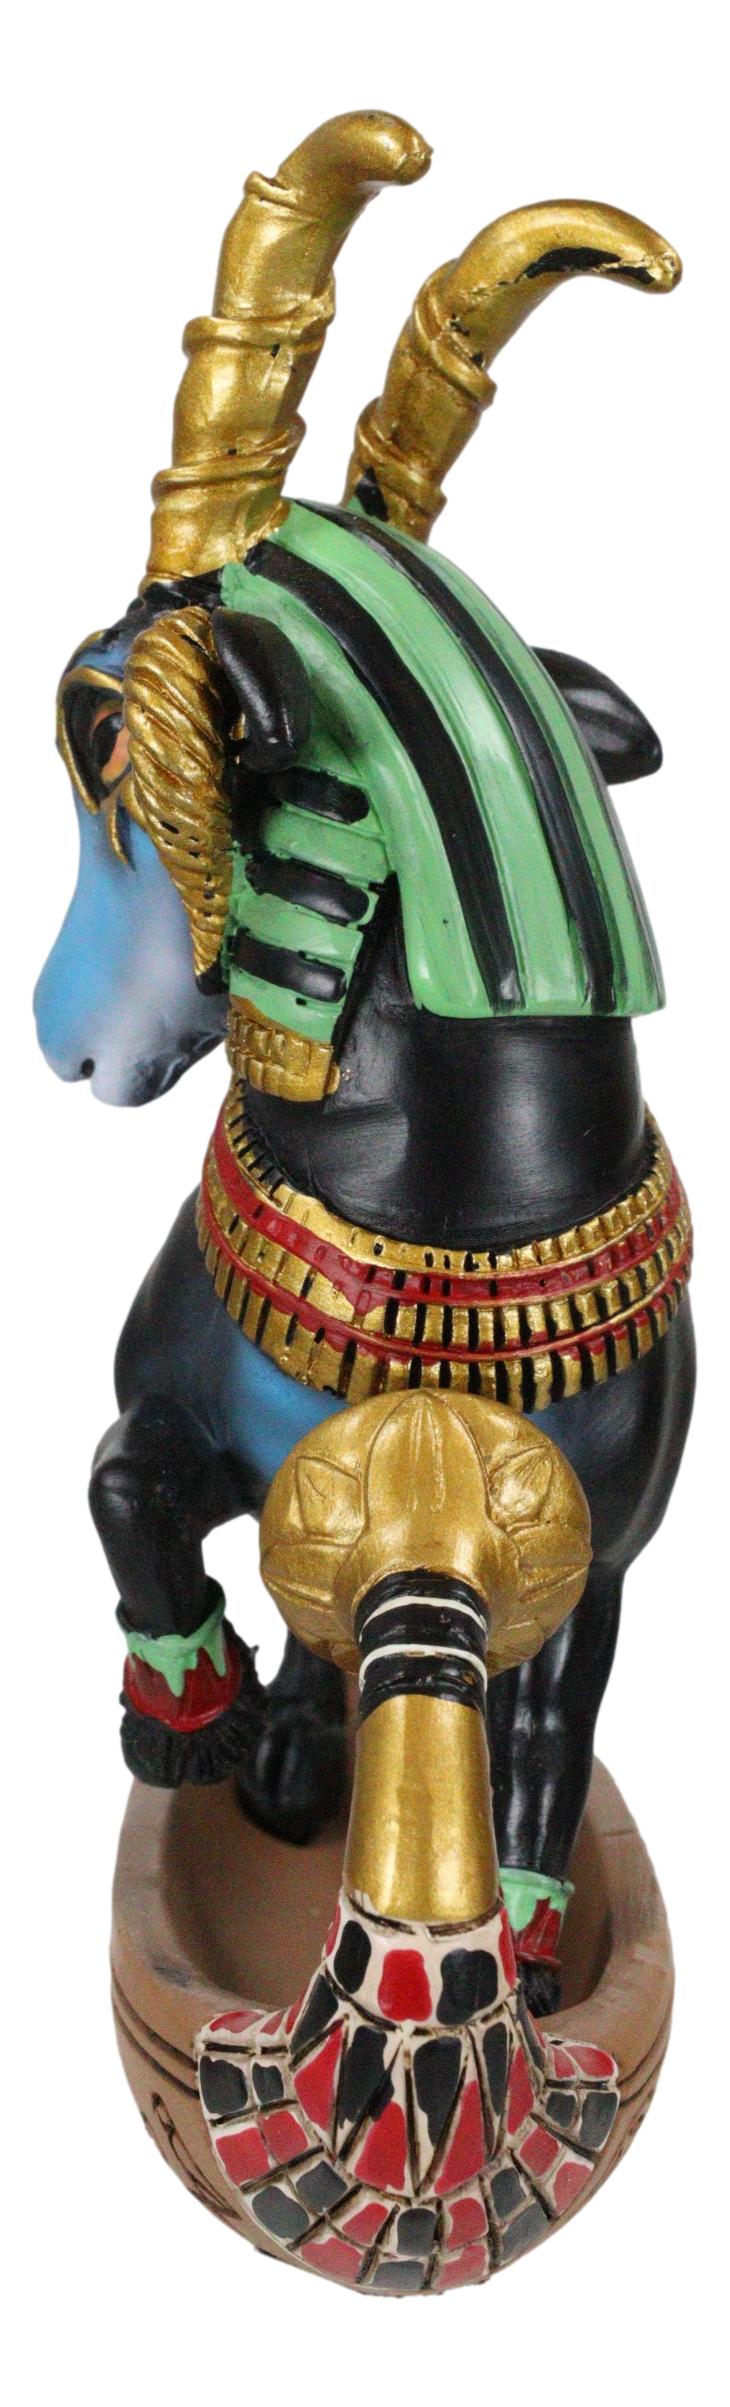 Egyptian Ram Headed God of Water And Procreation Khnum On Solar Boat Figurine